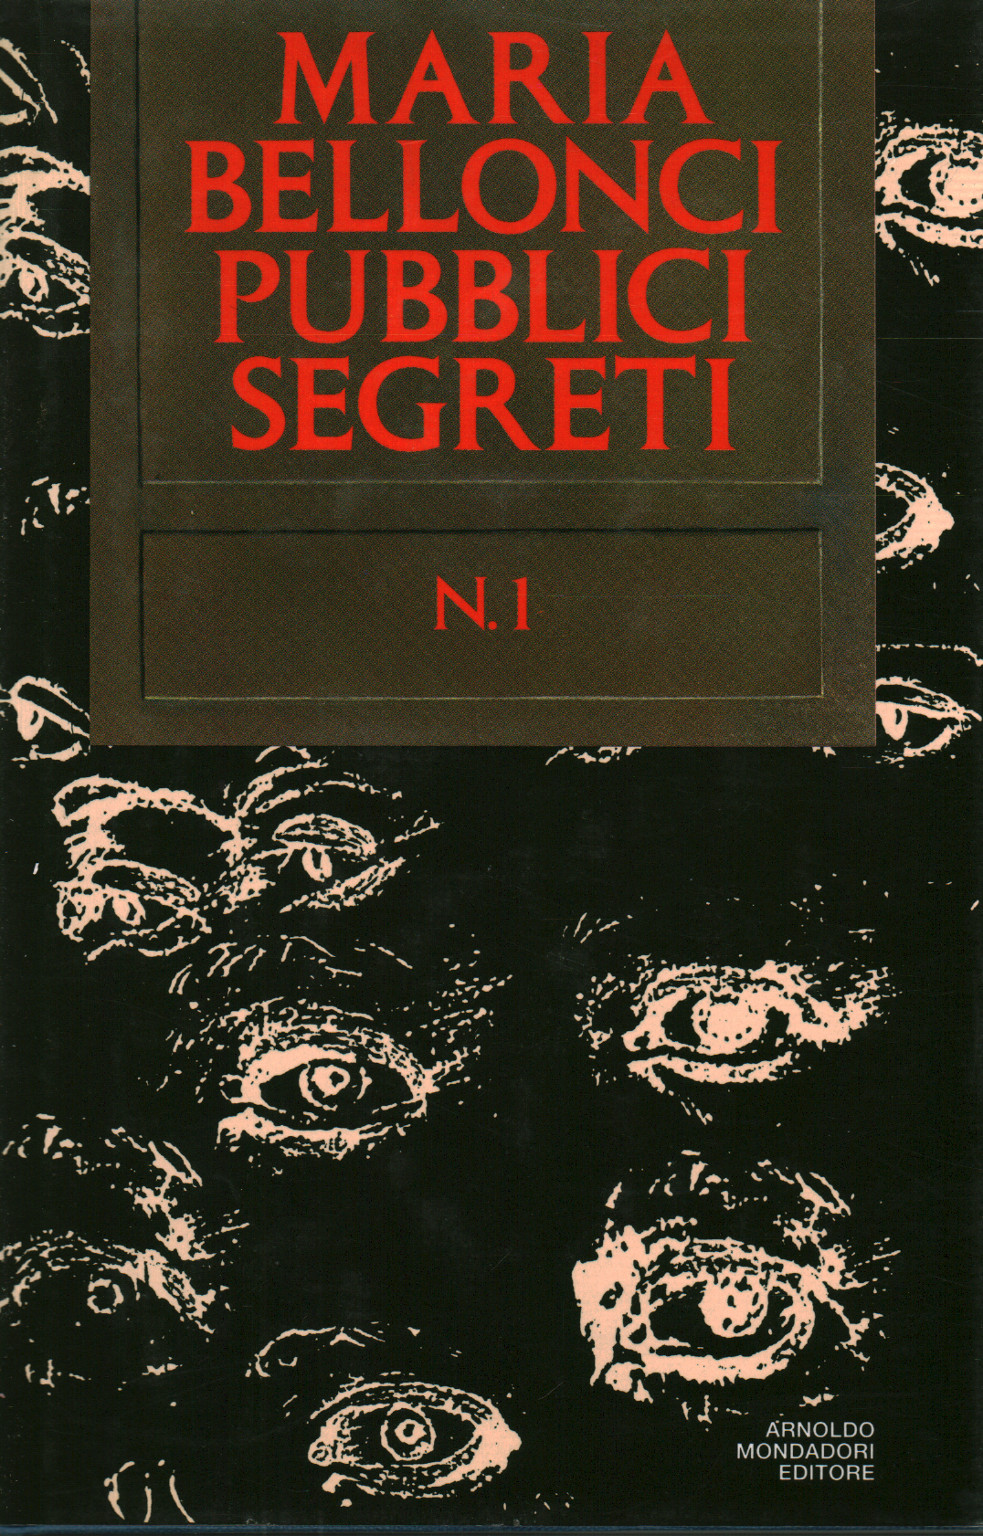 Pubblici segreti n.1, Maria Bellonci